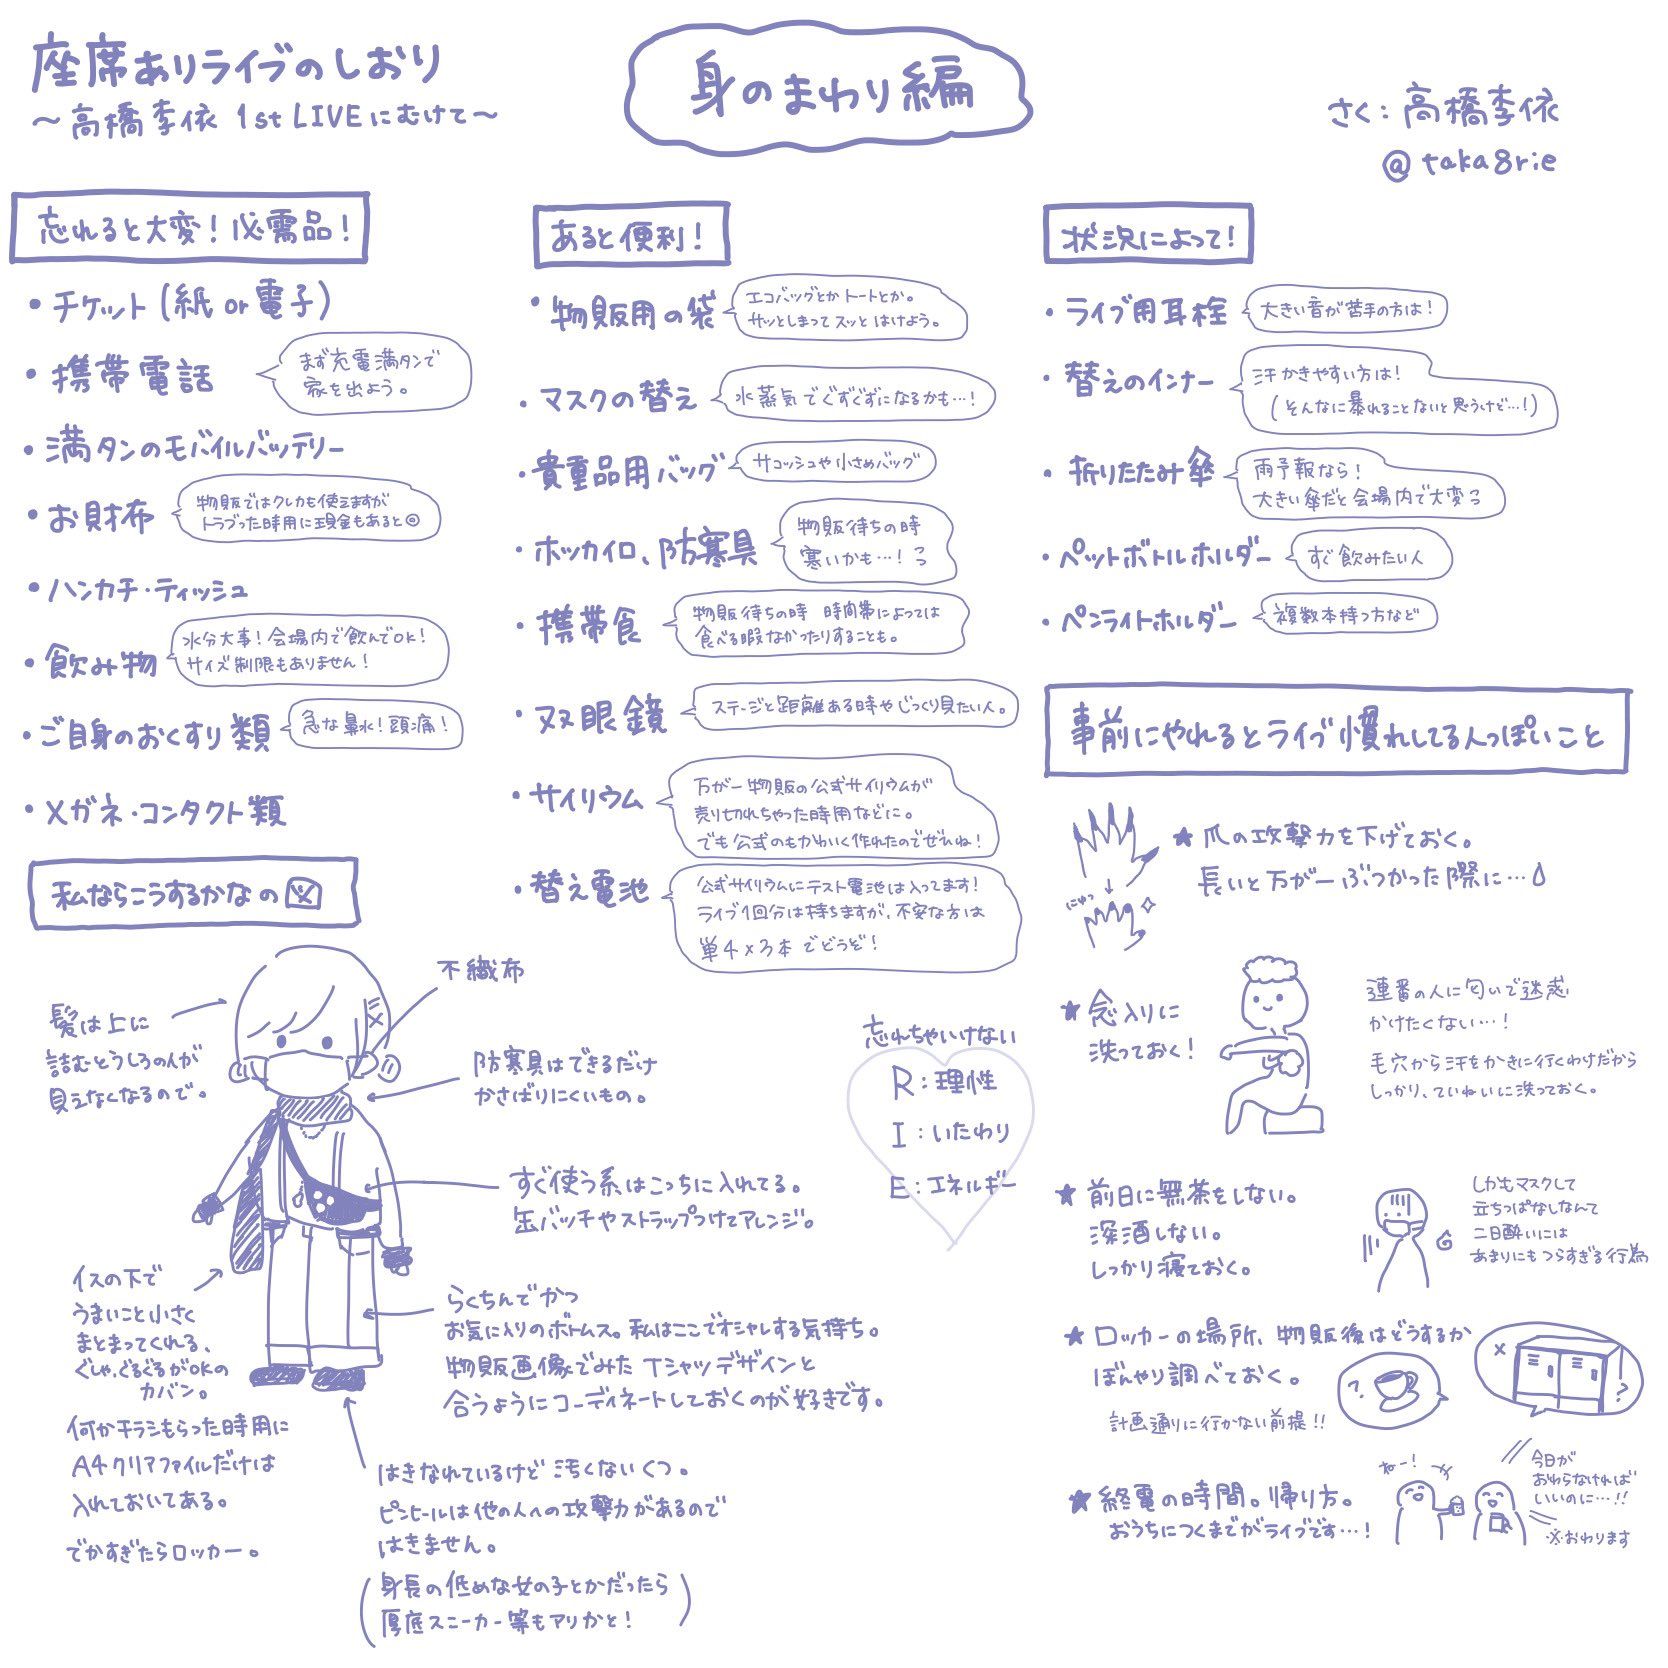 Нарисованный от руки гайд Такахаси. Источник: твиттер taka8rie